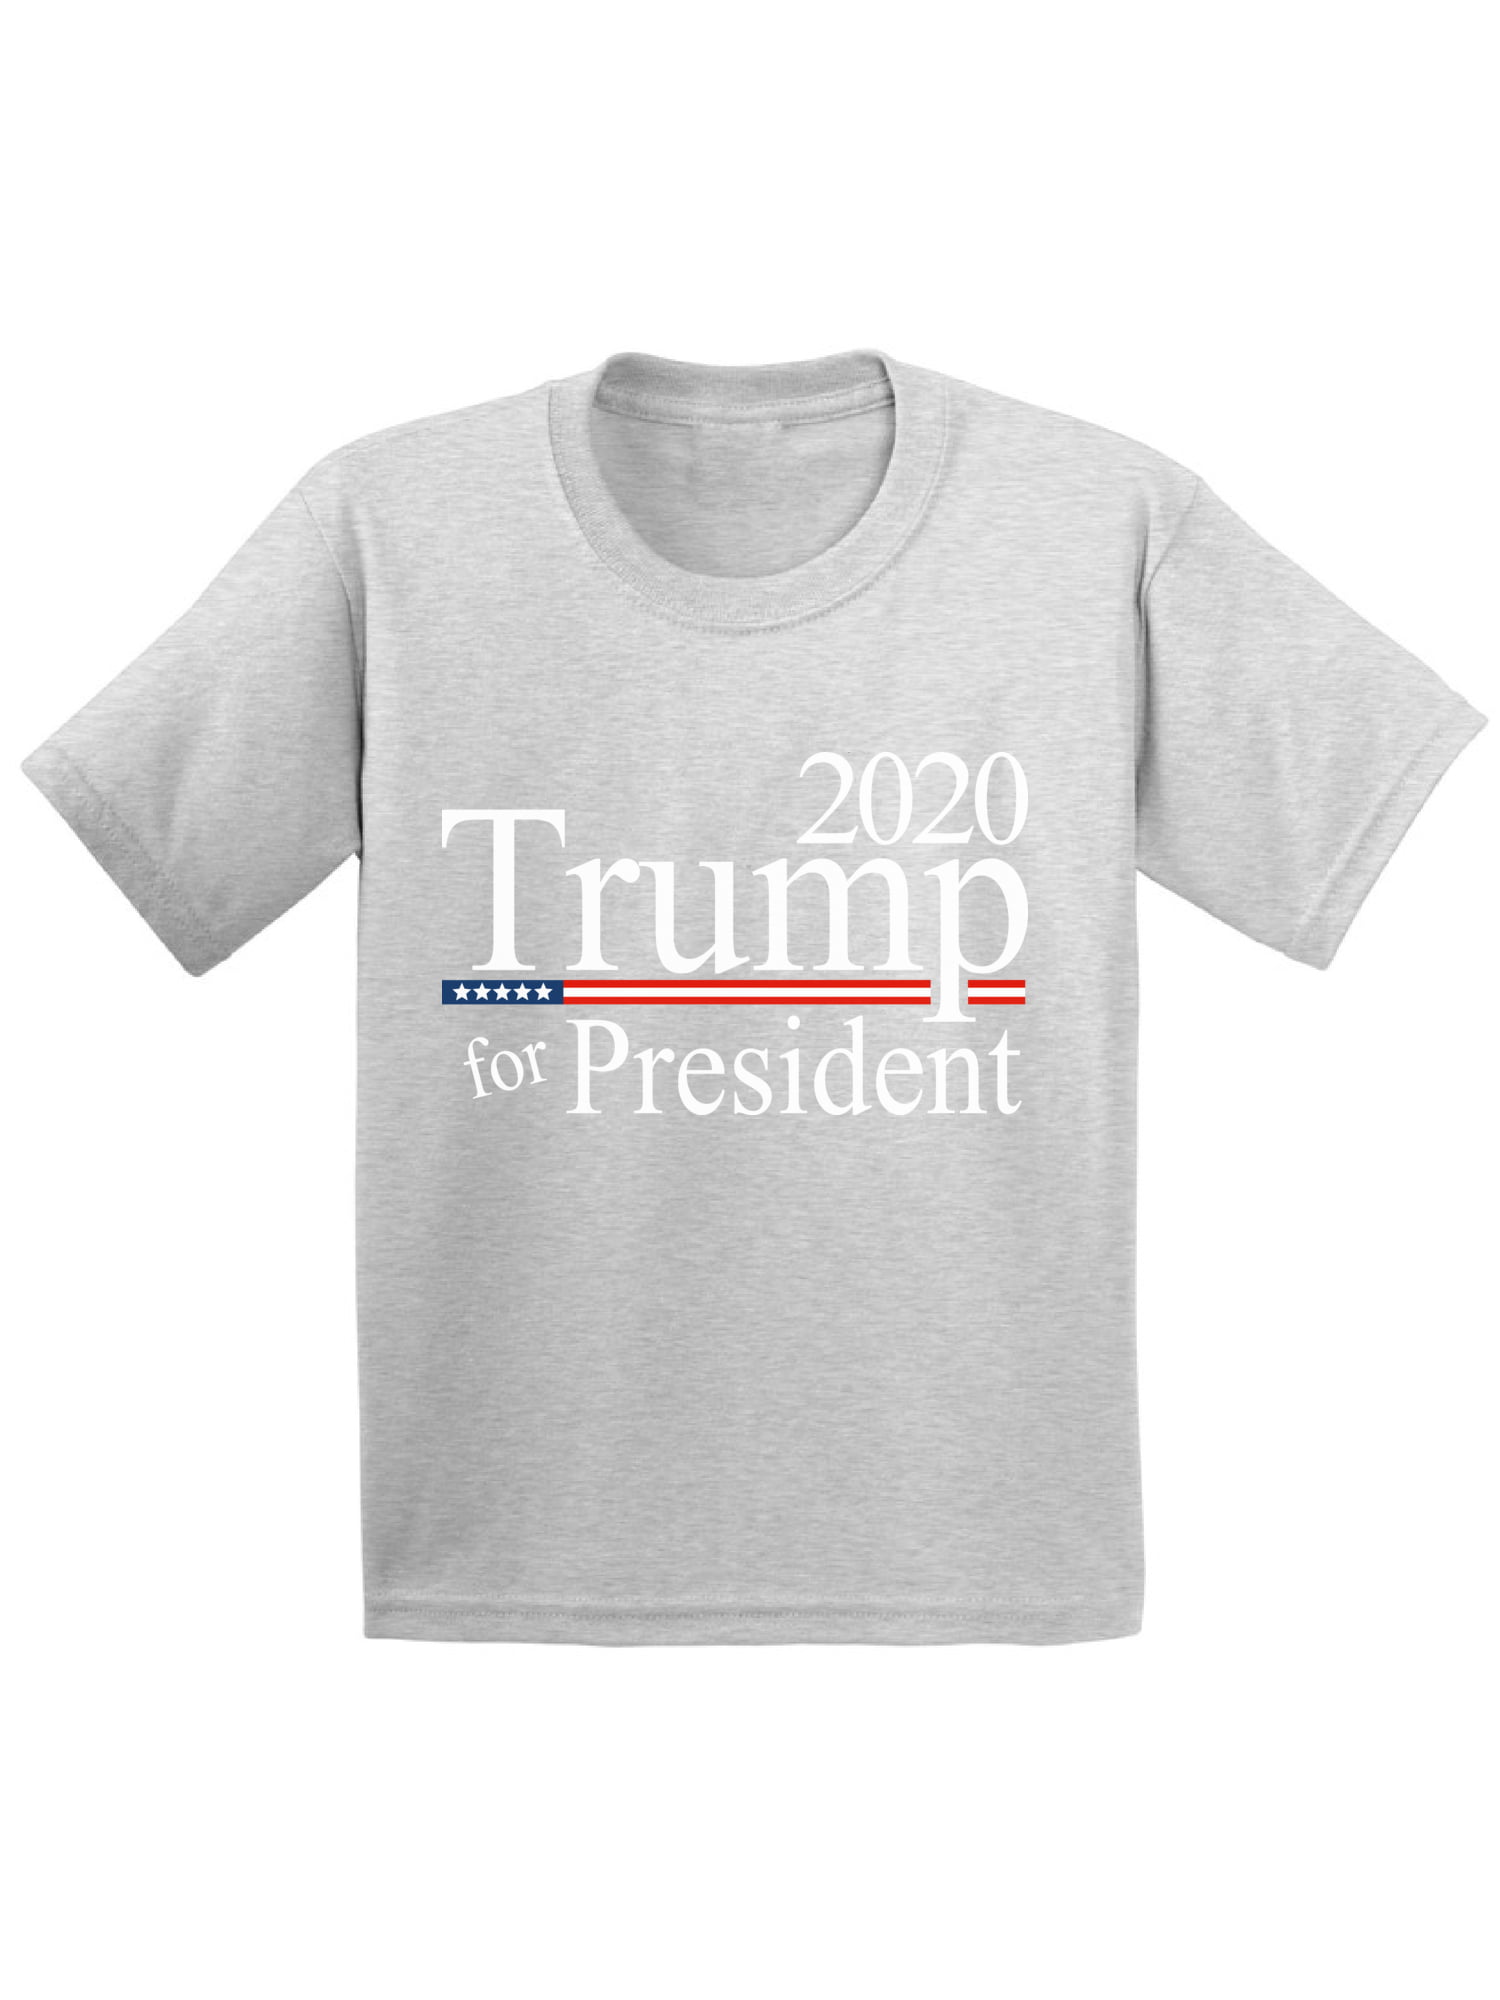 Trump 2020 USA Flag Youth's T-Shirt Donald Pence MAGA Political Election Tees 